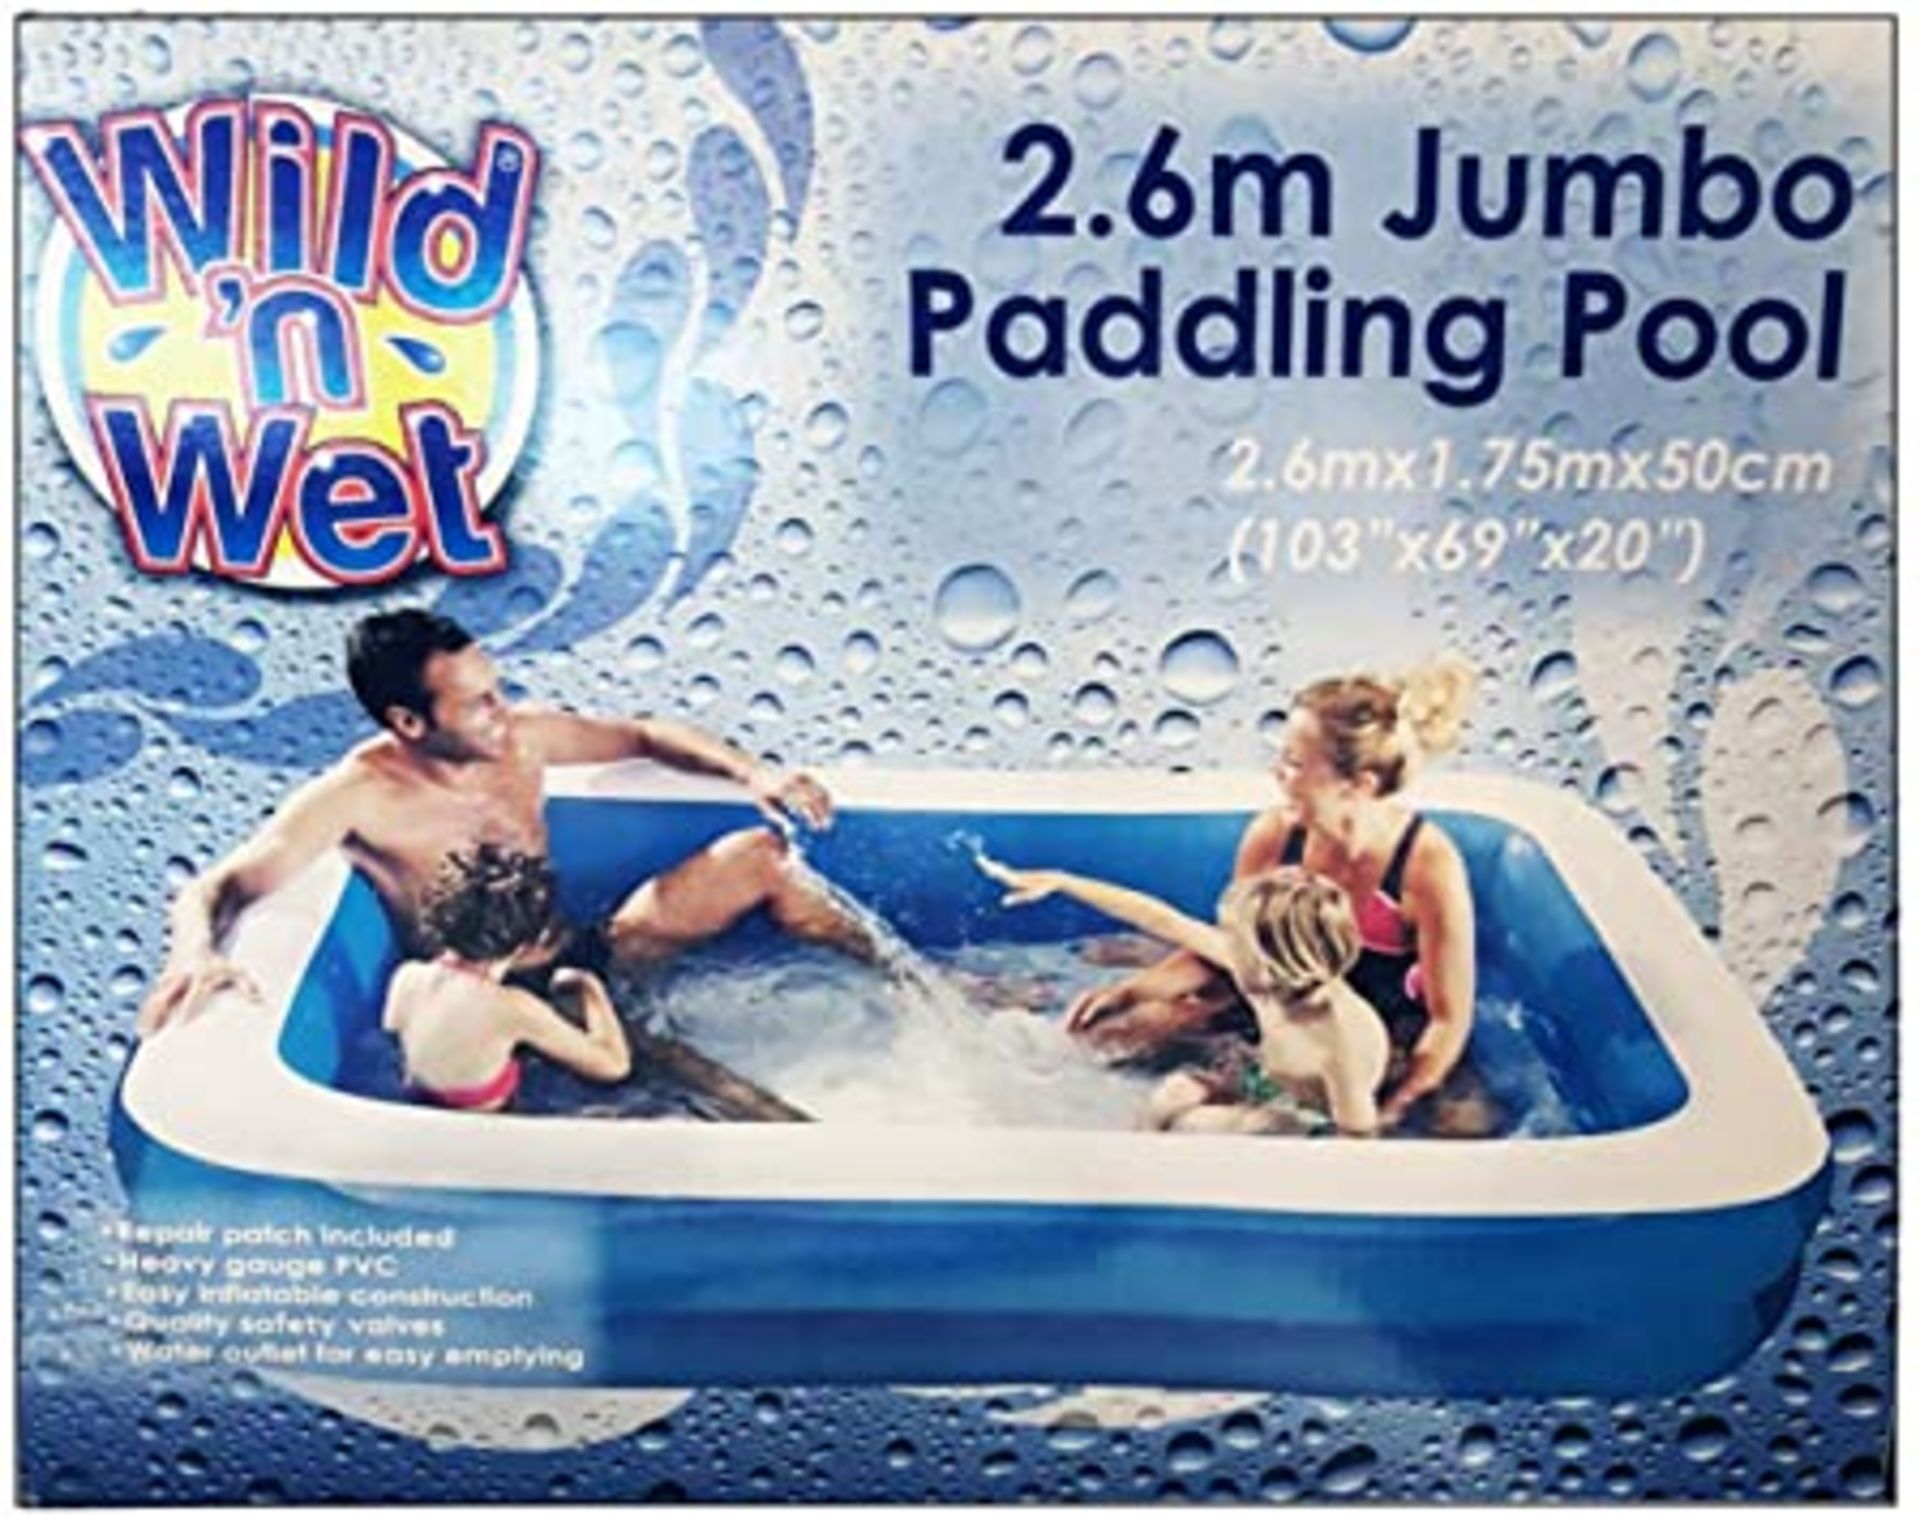 + VAT Brand New 2.6m x 1.75m x 50cm Jumbo Paddling Pool - Made From Heavy Gauge PVC - Repair Patch - Image 2 of 2